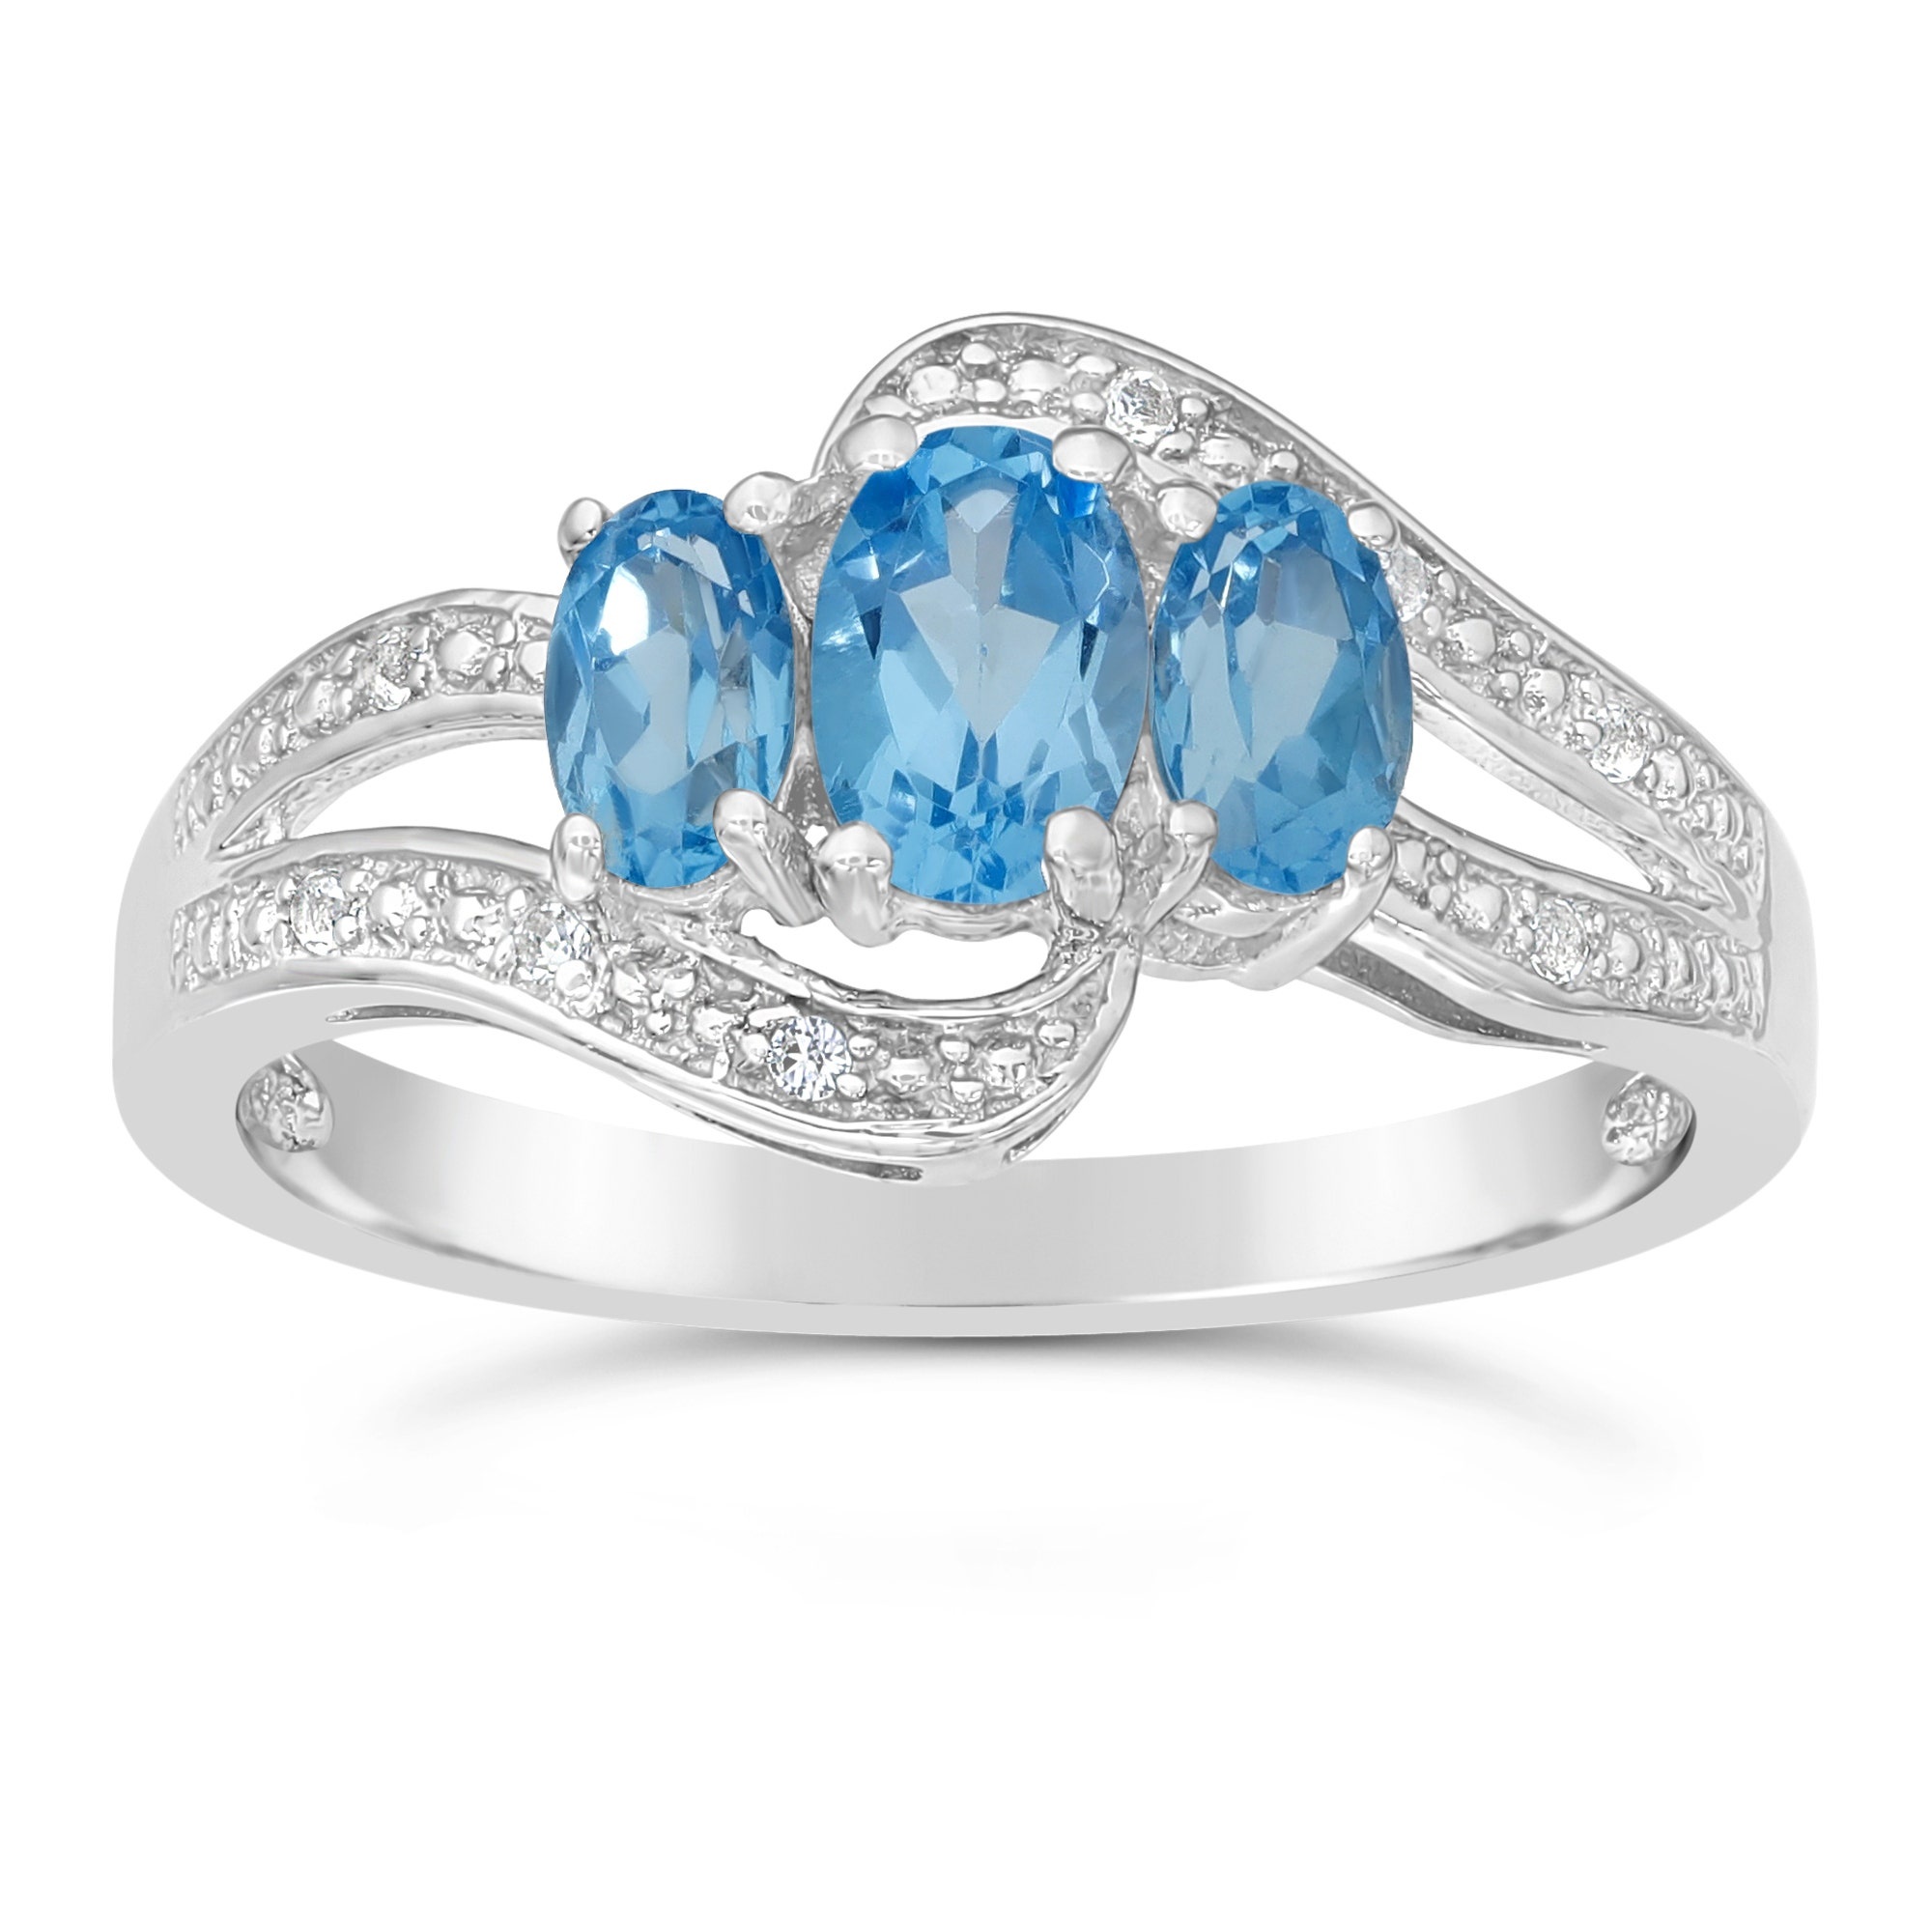 Triple oval blue topaz, Sterling silver ring, Genuine gemstone, 2000x2000 HD Handy